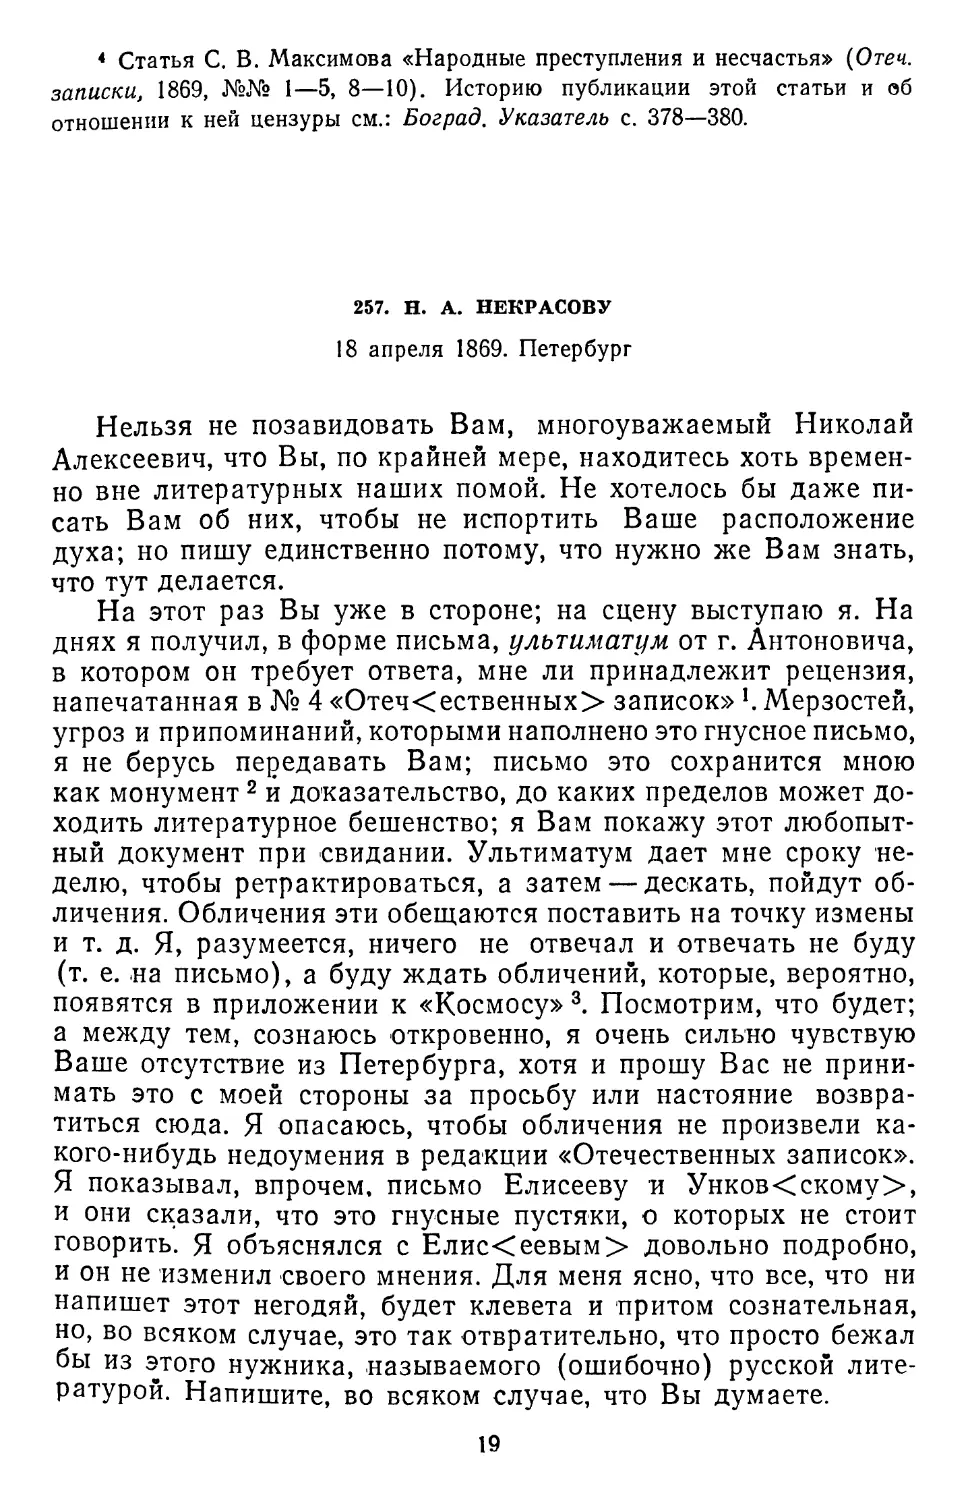 257.Н. А. Некрасову. 18 апреля 1869. Петербург ...